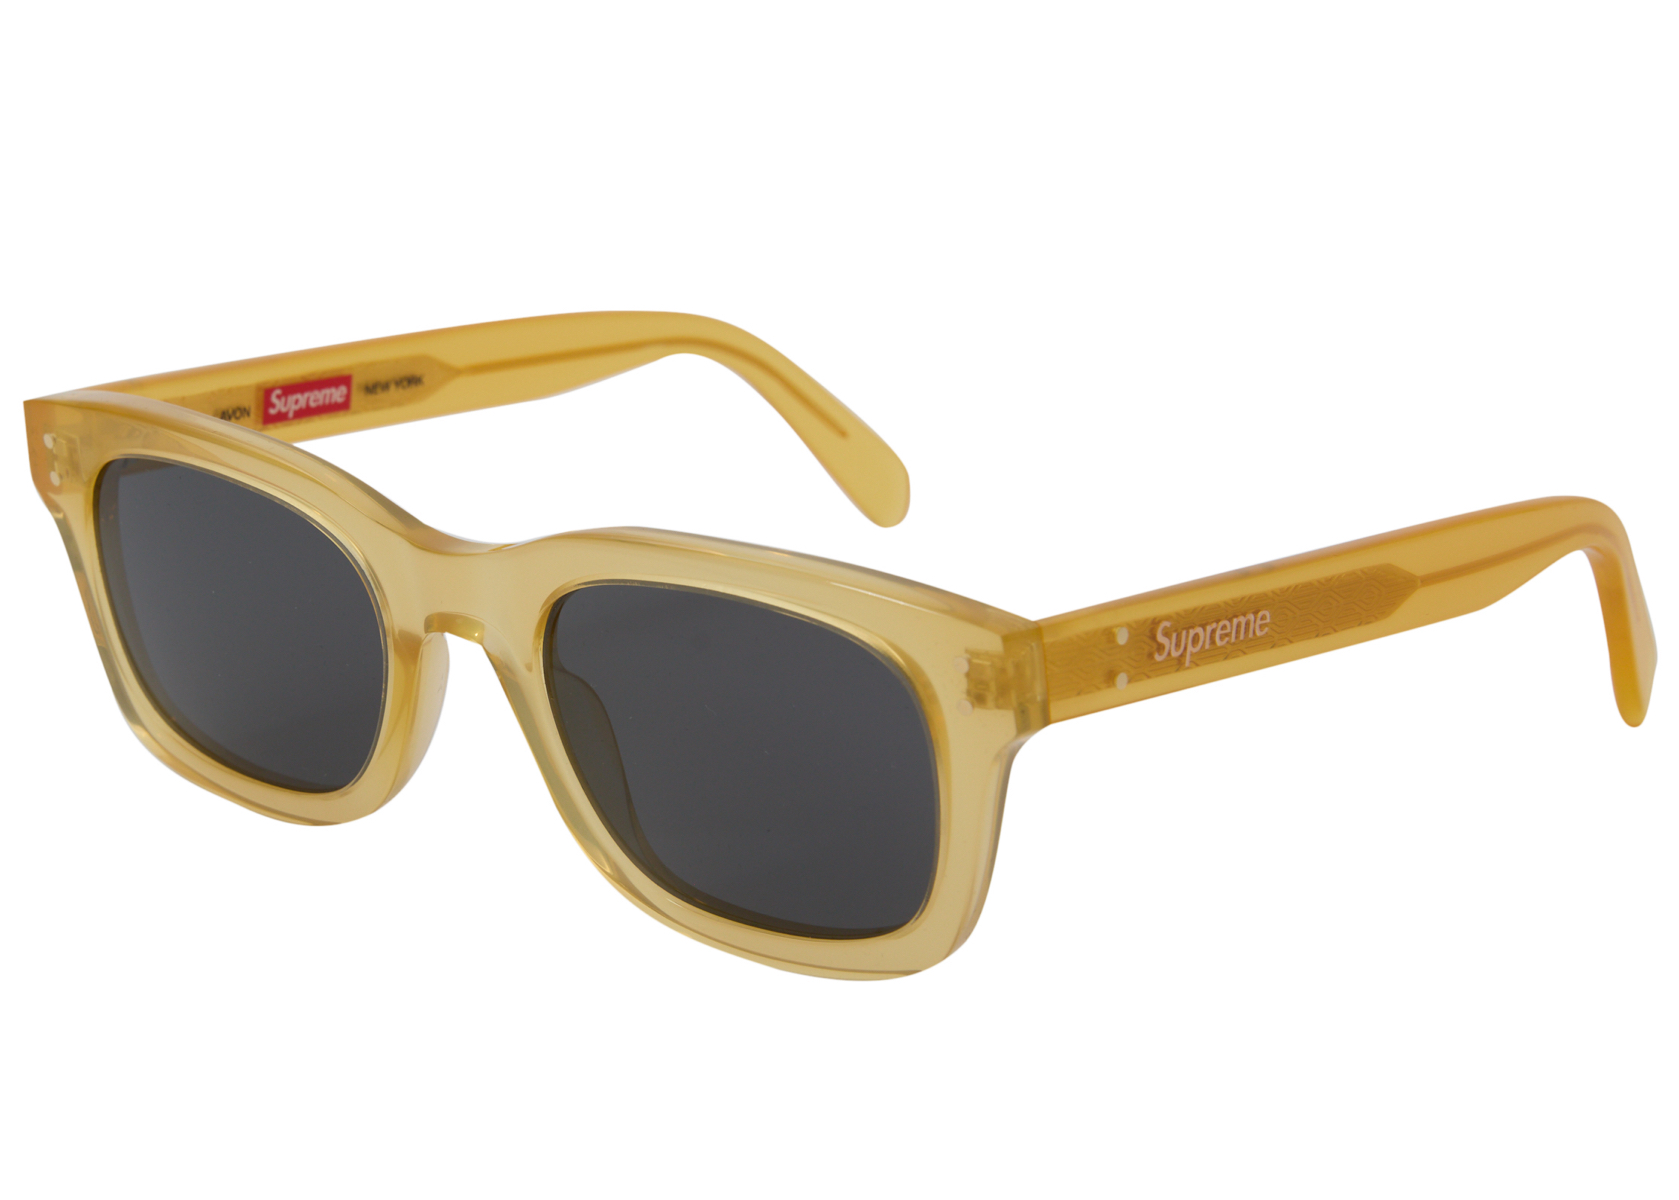 Supreme Avon Sunglasses Yellow